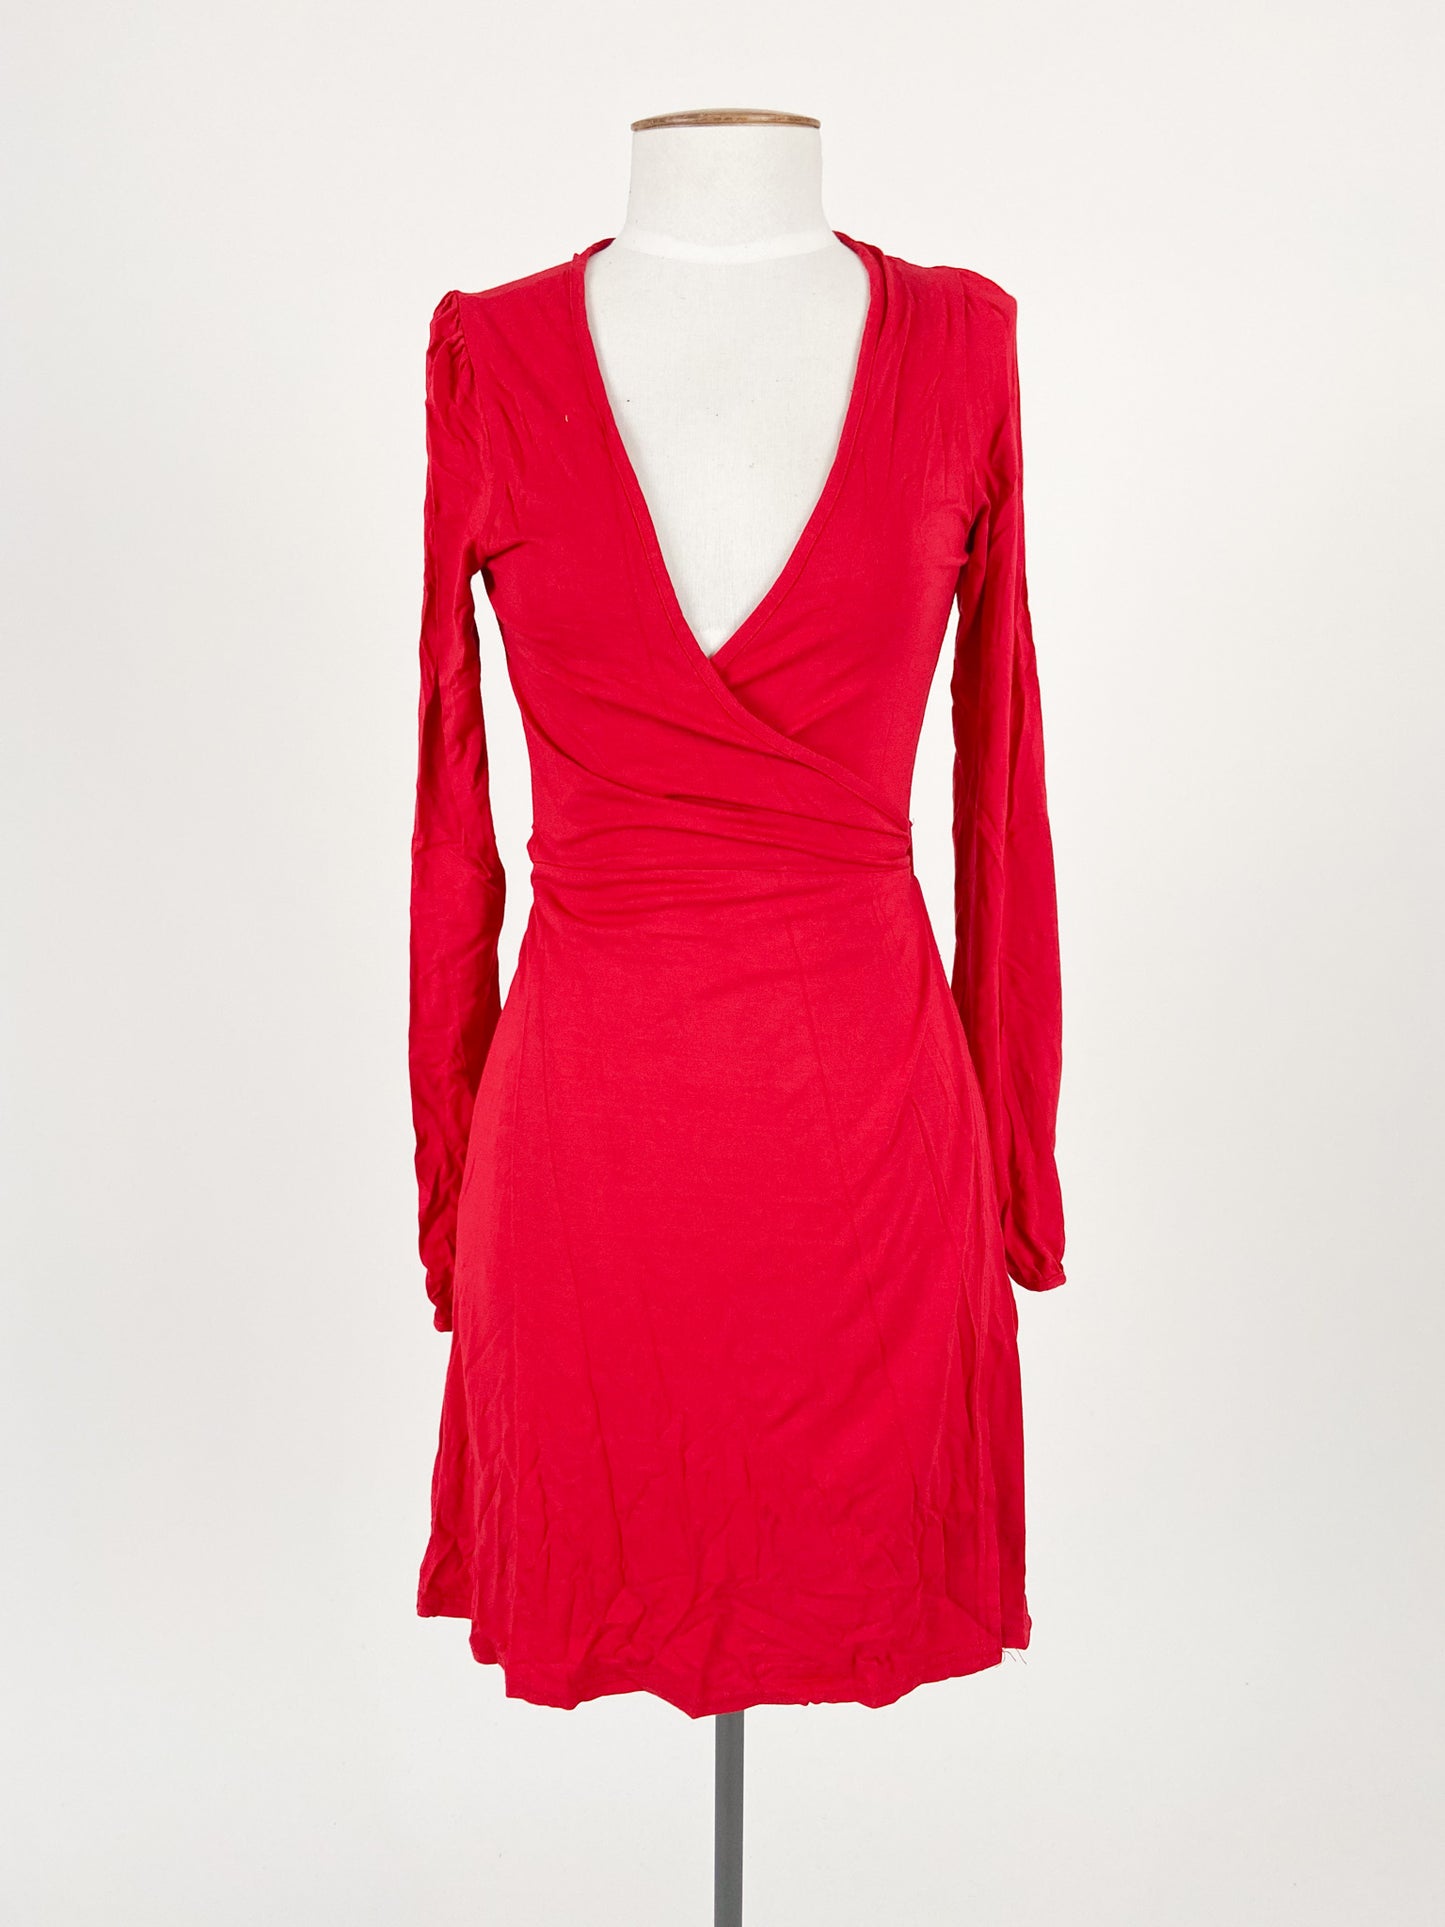 Evita | Red Casual Dress | Size 8